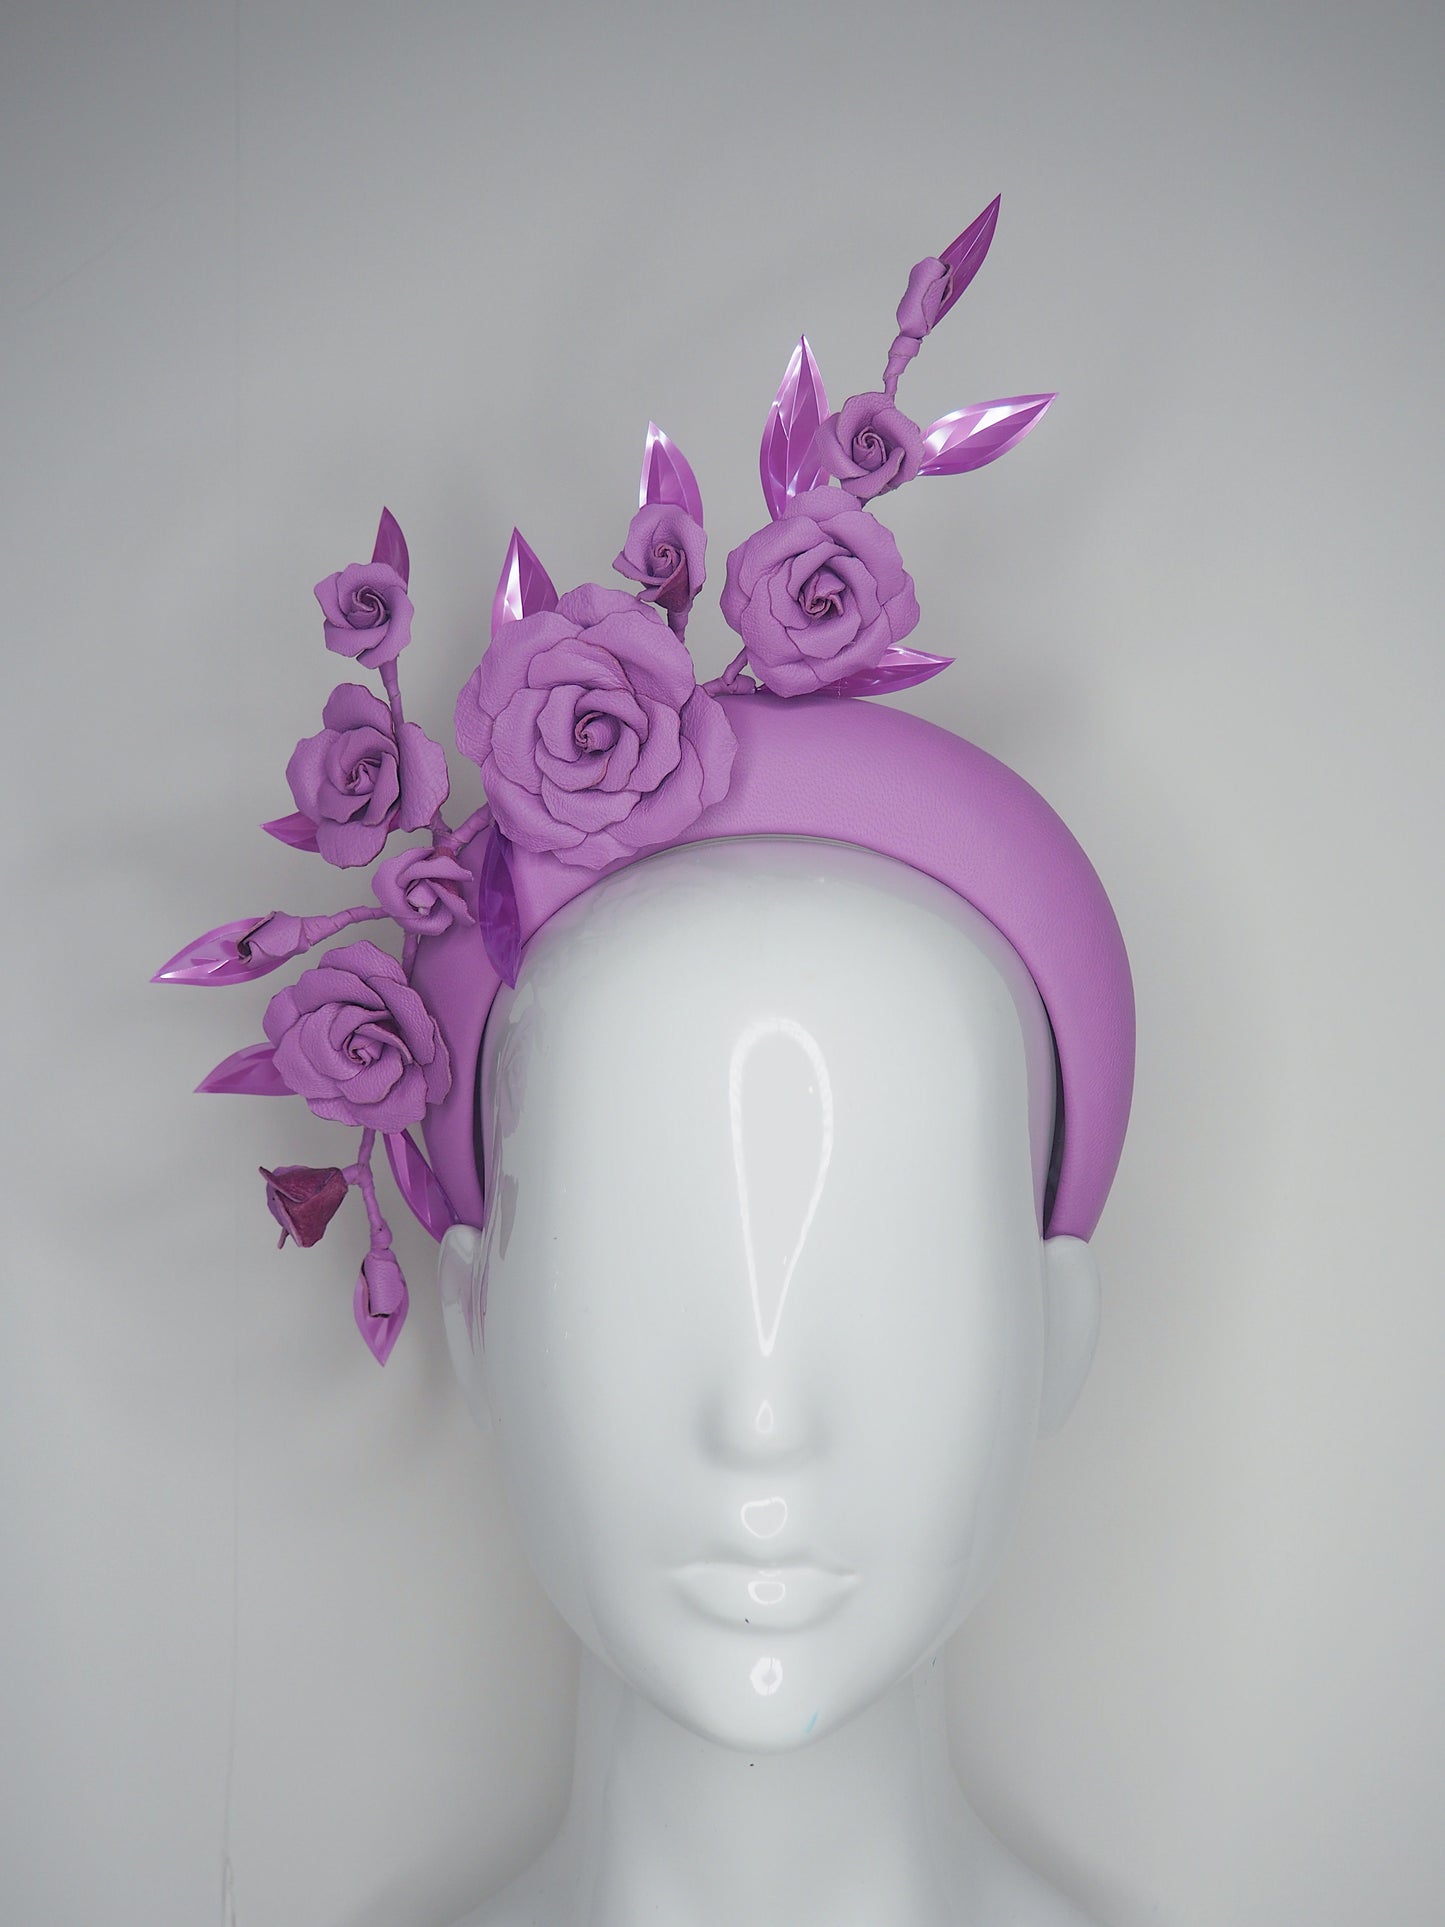 Lavender Haze - Lavender purple leather 3d headband with cascading roses